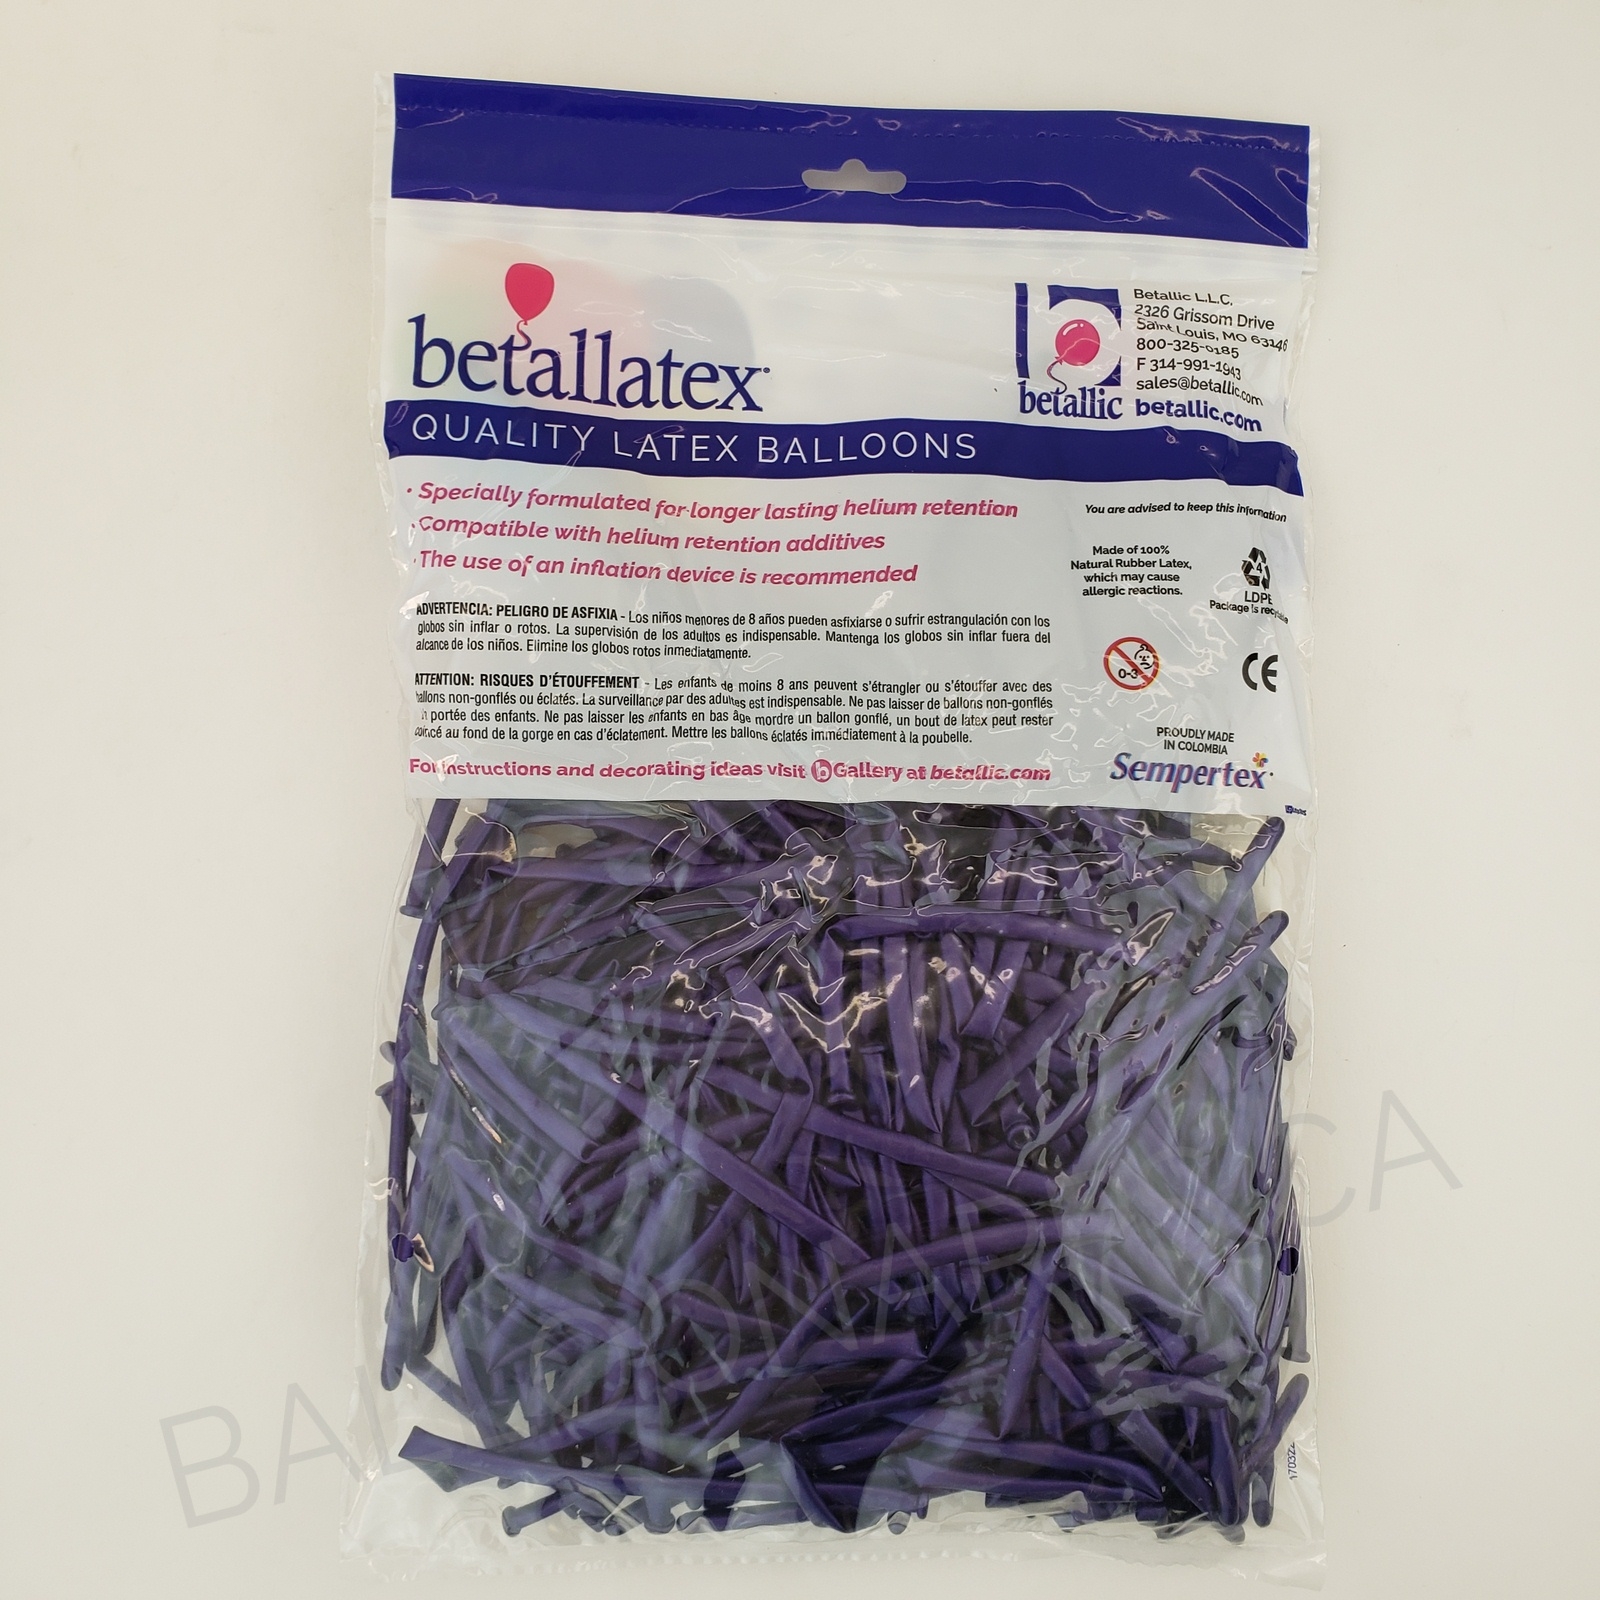 Sempertex 160 Metallic Violet